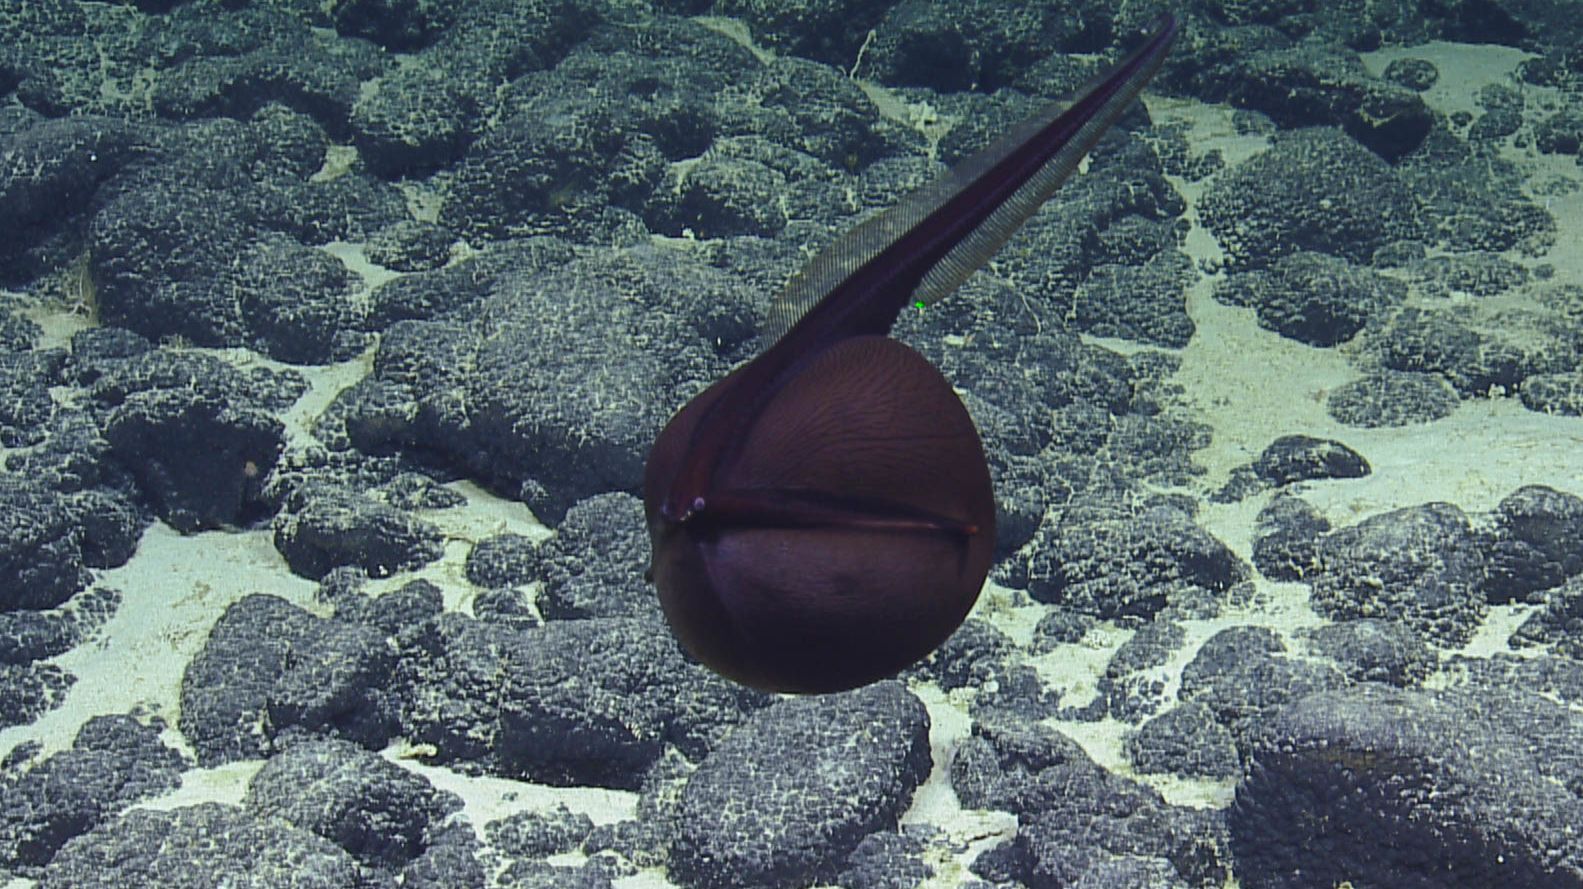 Watch Gulper’s eel inflate like a terrifying balloon